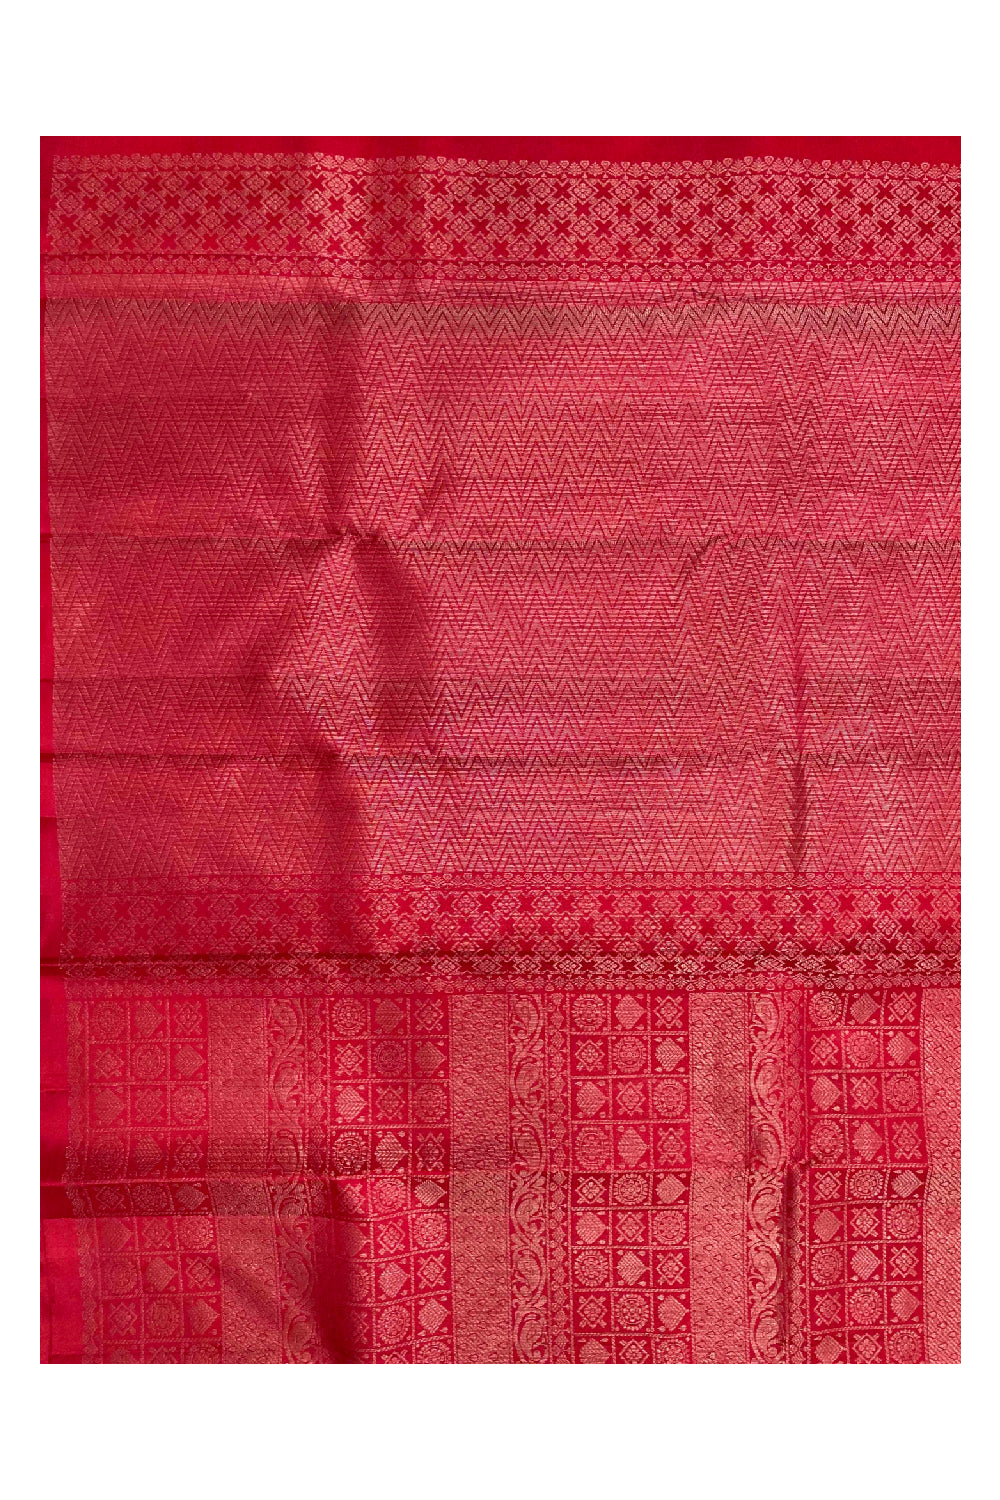 Southloom Handloom Pure Silk Manthrakodi Kanchipuram Saree in Single Red Colour and Silver Zari Motifs